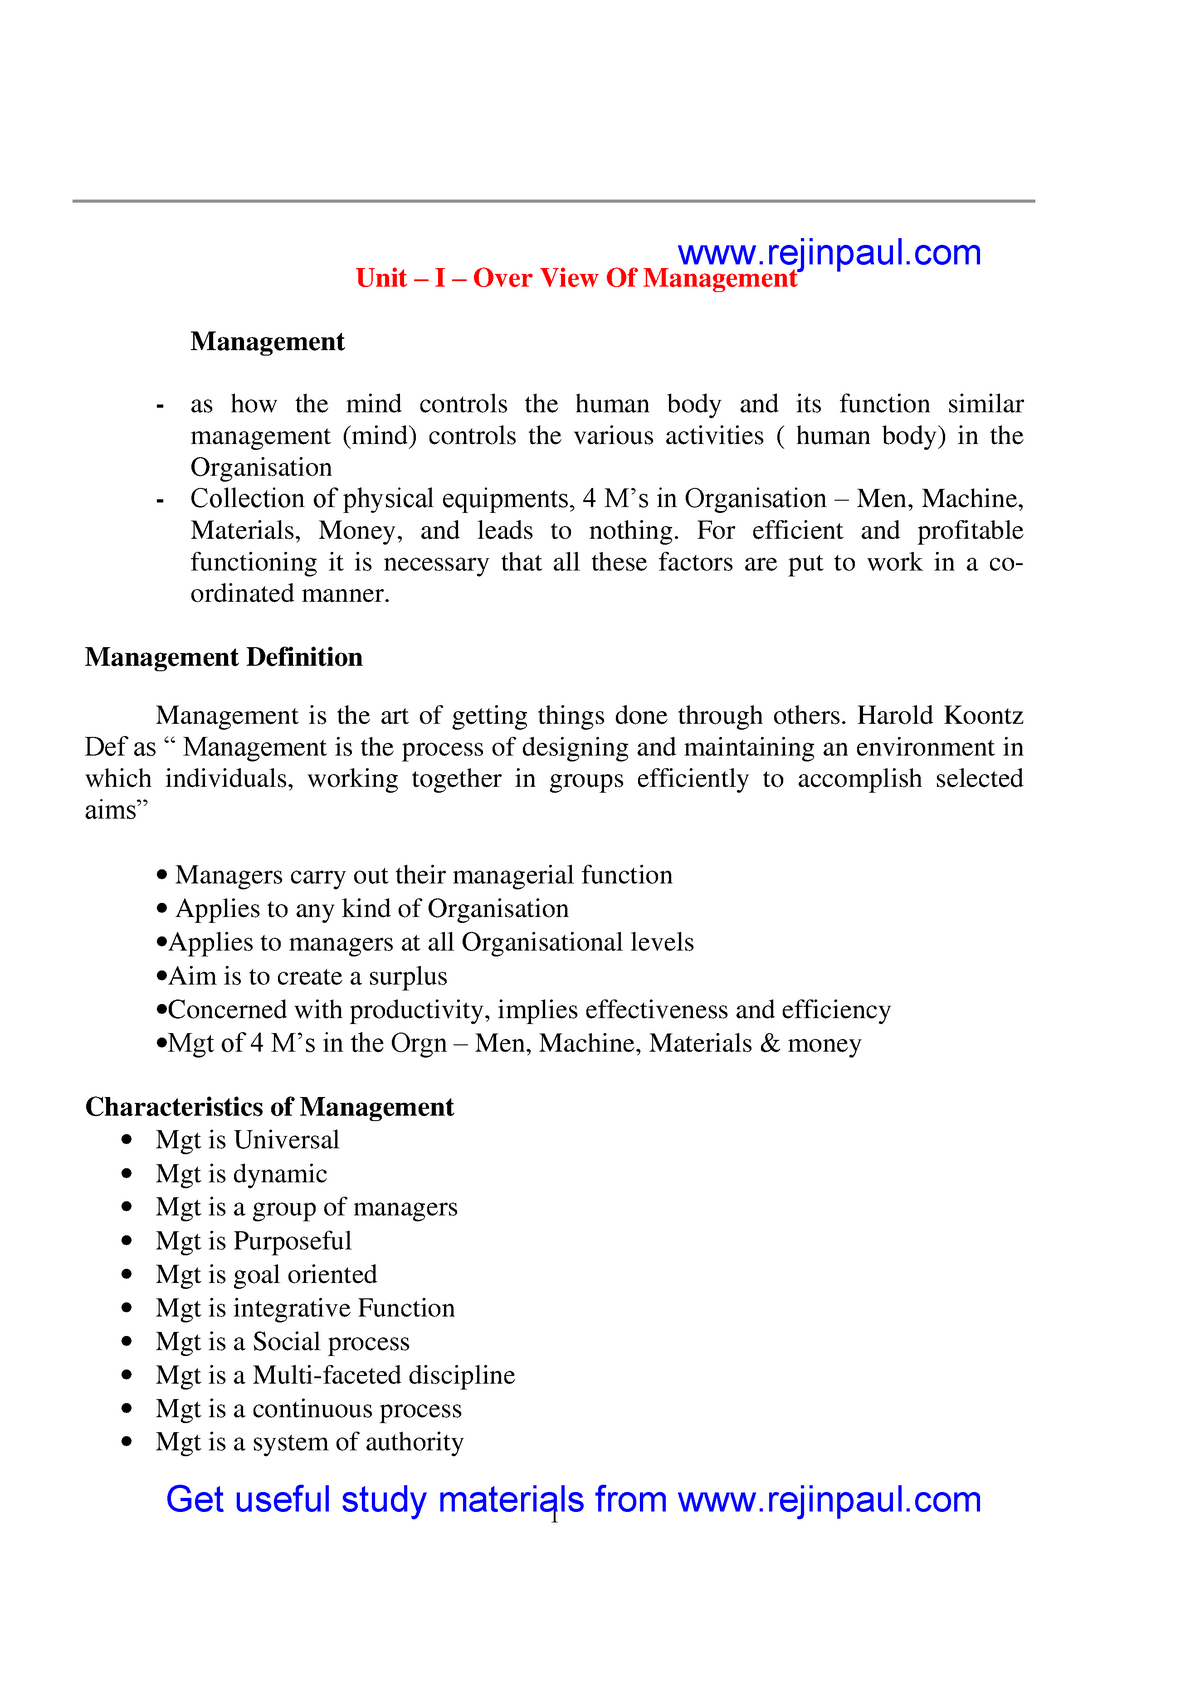 Pom notes rejinpaul - in business administration - 1MBA - StuDocu